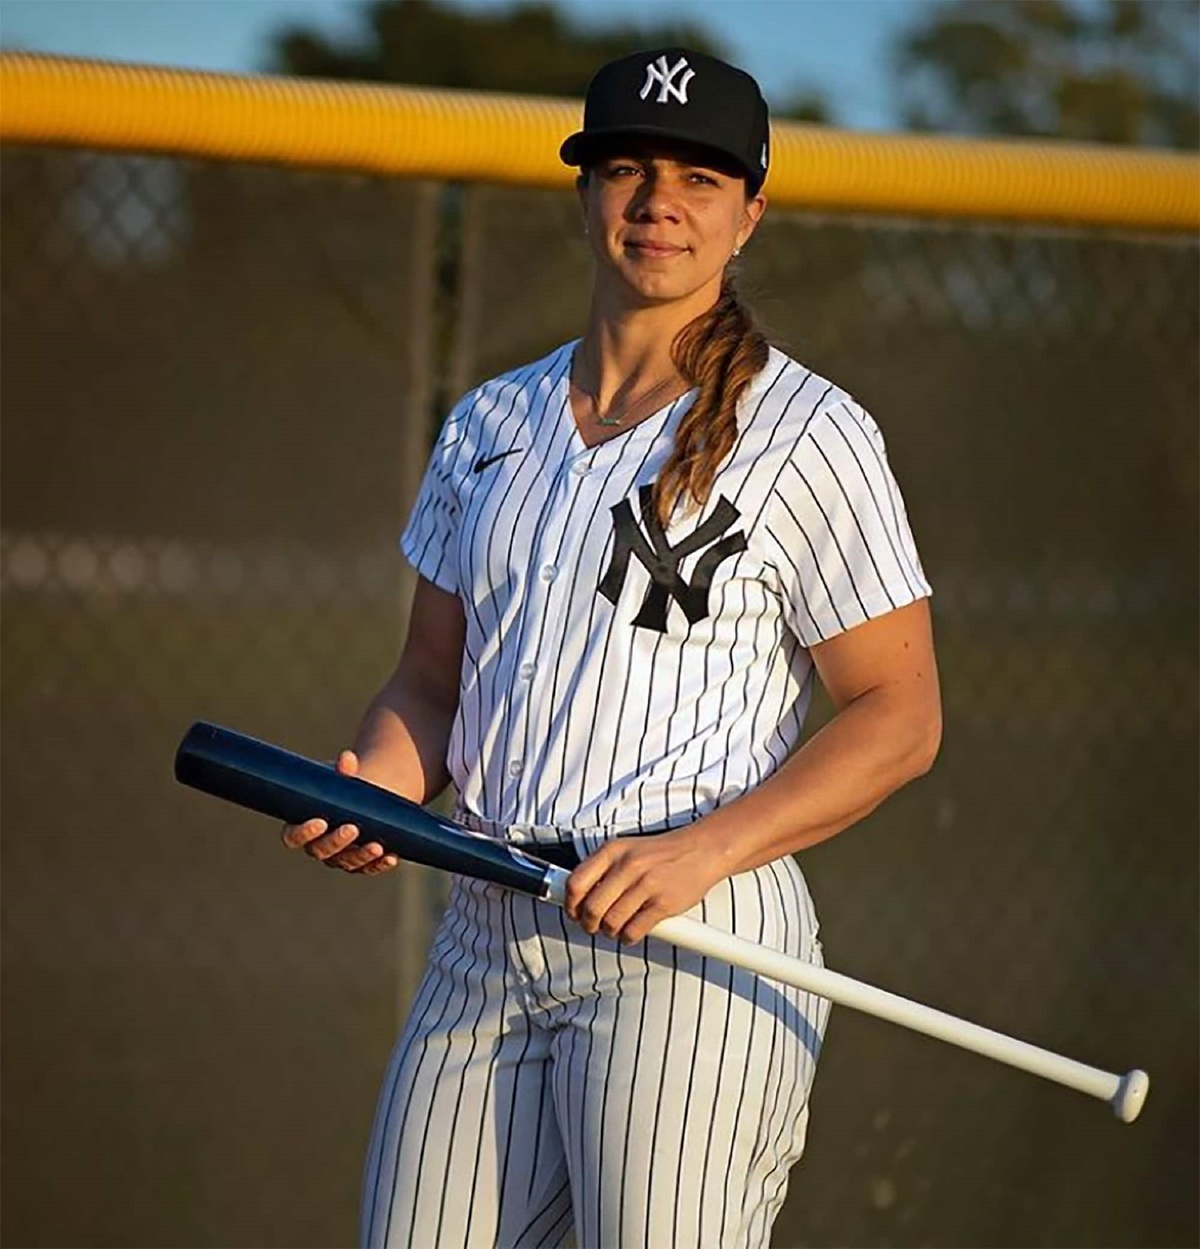 1642350123 7 Rachel Balkovec breaks major league stigmas with Yankees